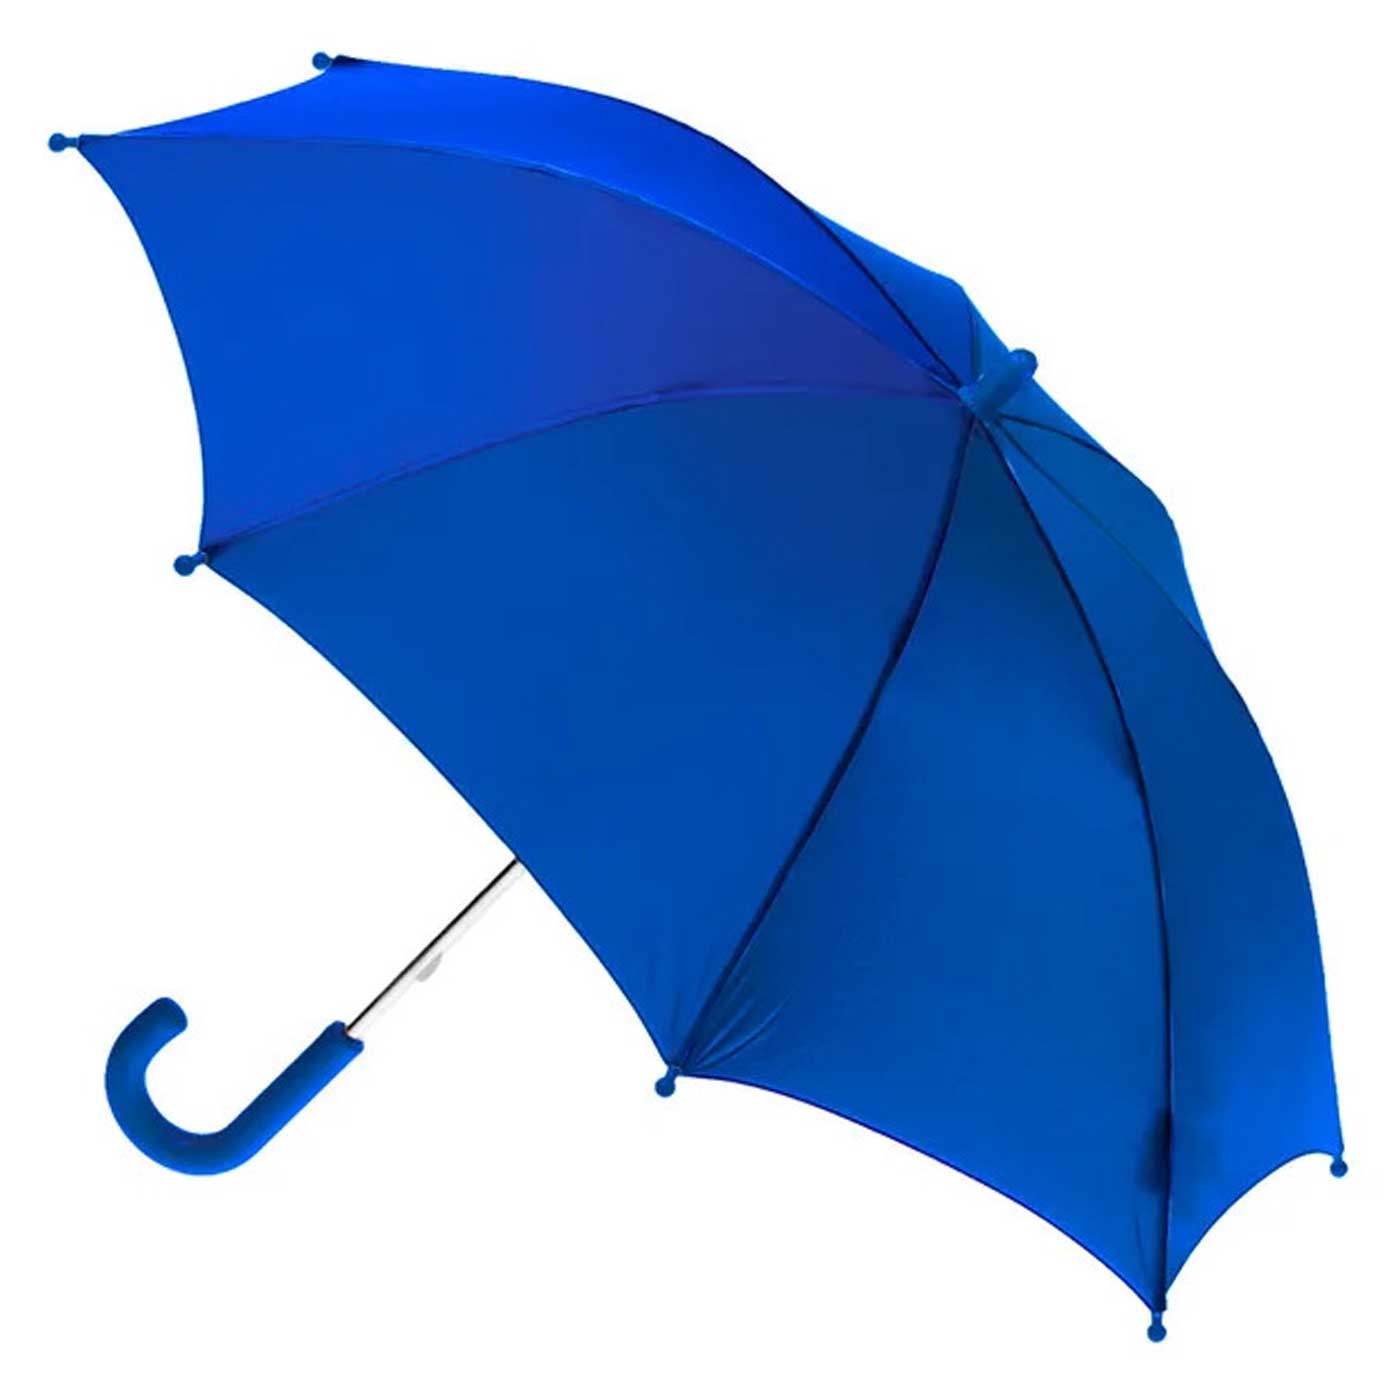 Clifton Kids Safety Umbrella UPF50+ Sun Protection Royal